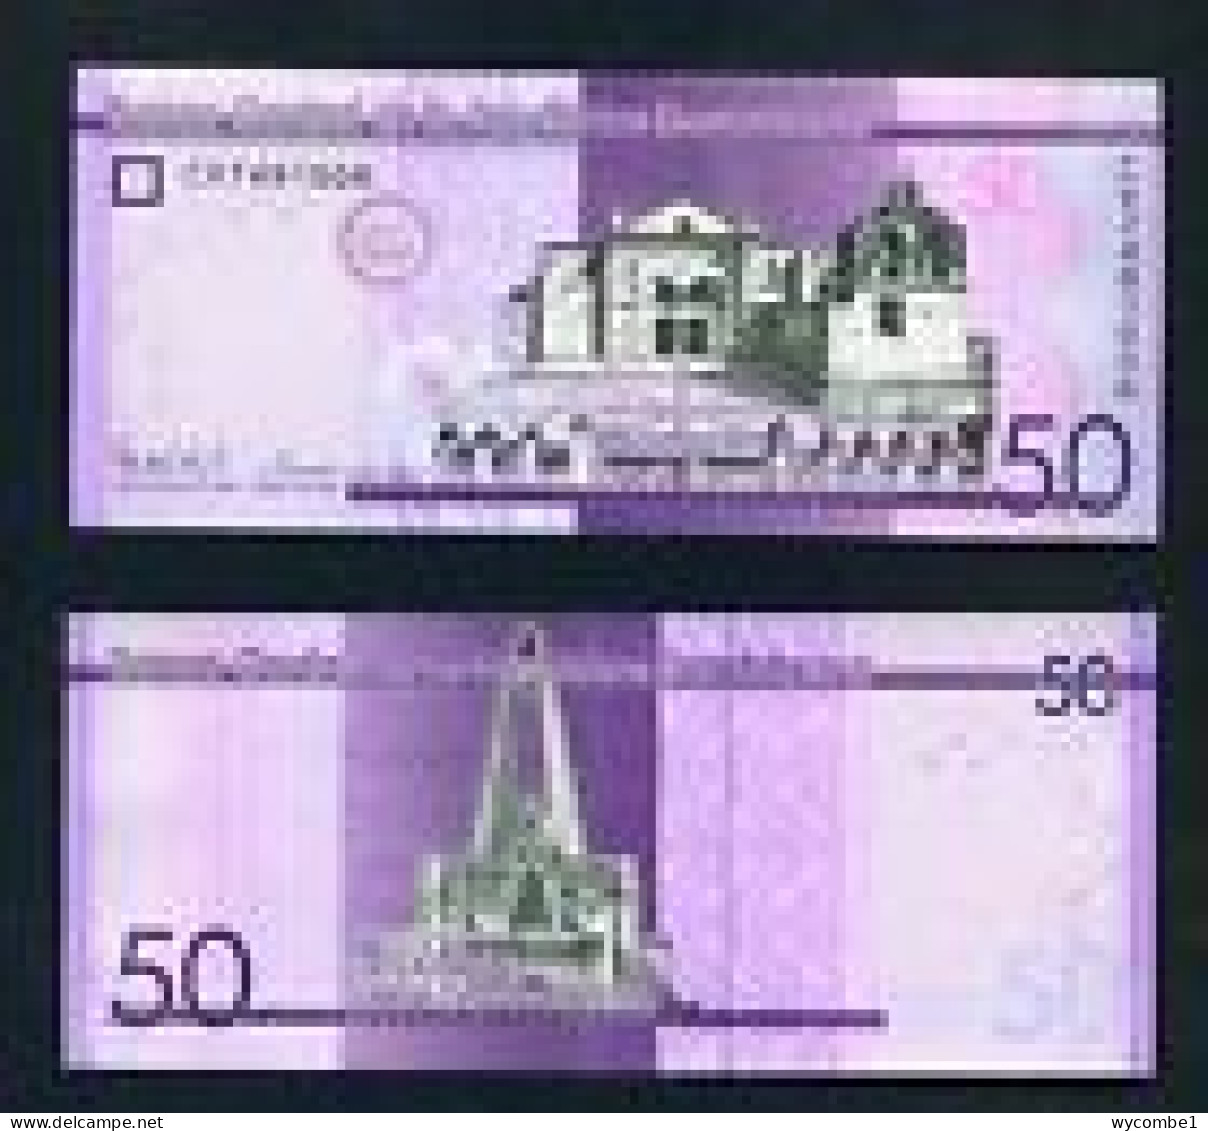 DOMINICAN REPUBLIC  -  2015 50 Pesos UNC  Banknote - Dominicana